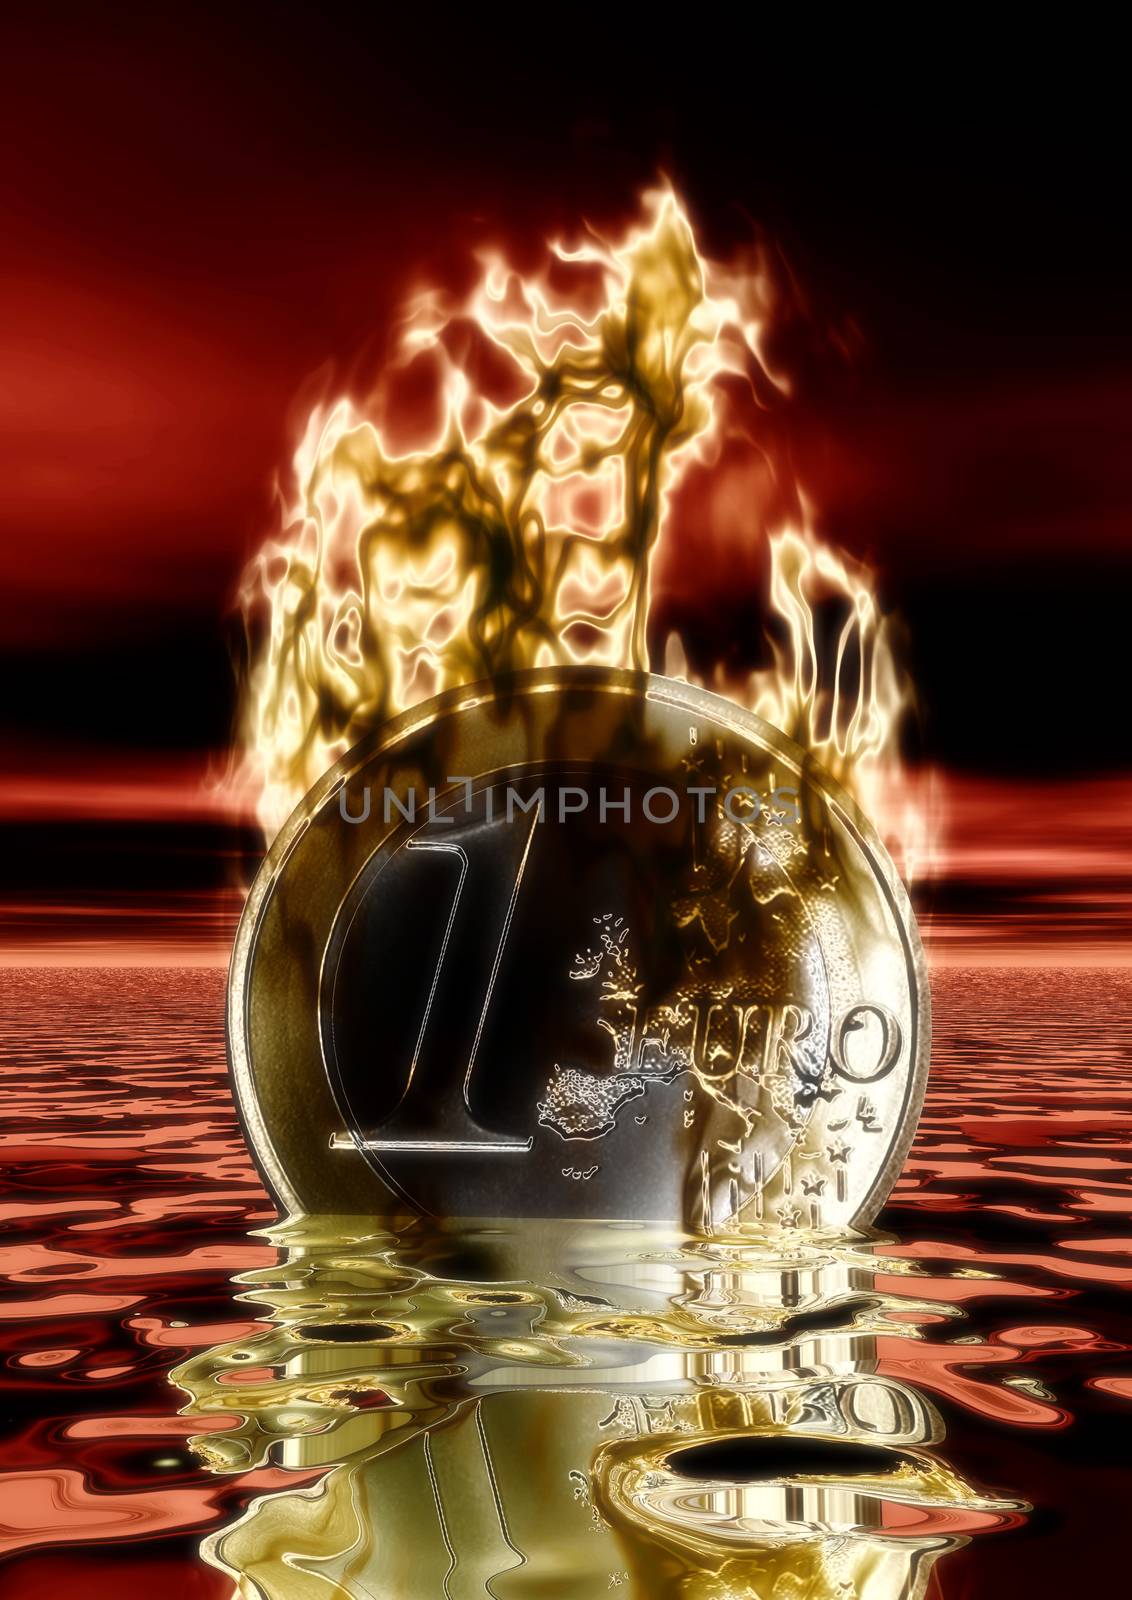 Digital Visualization of a burning Euro